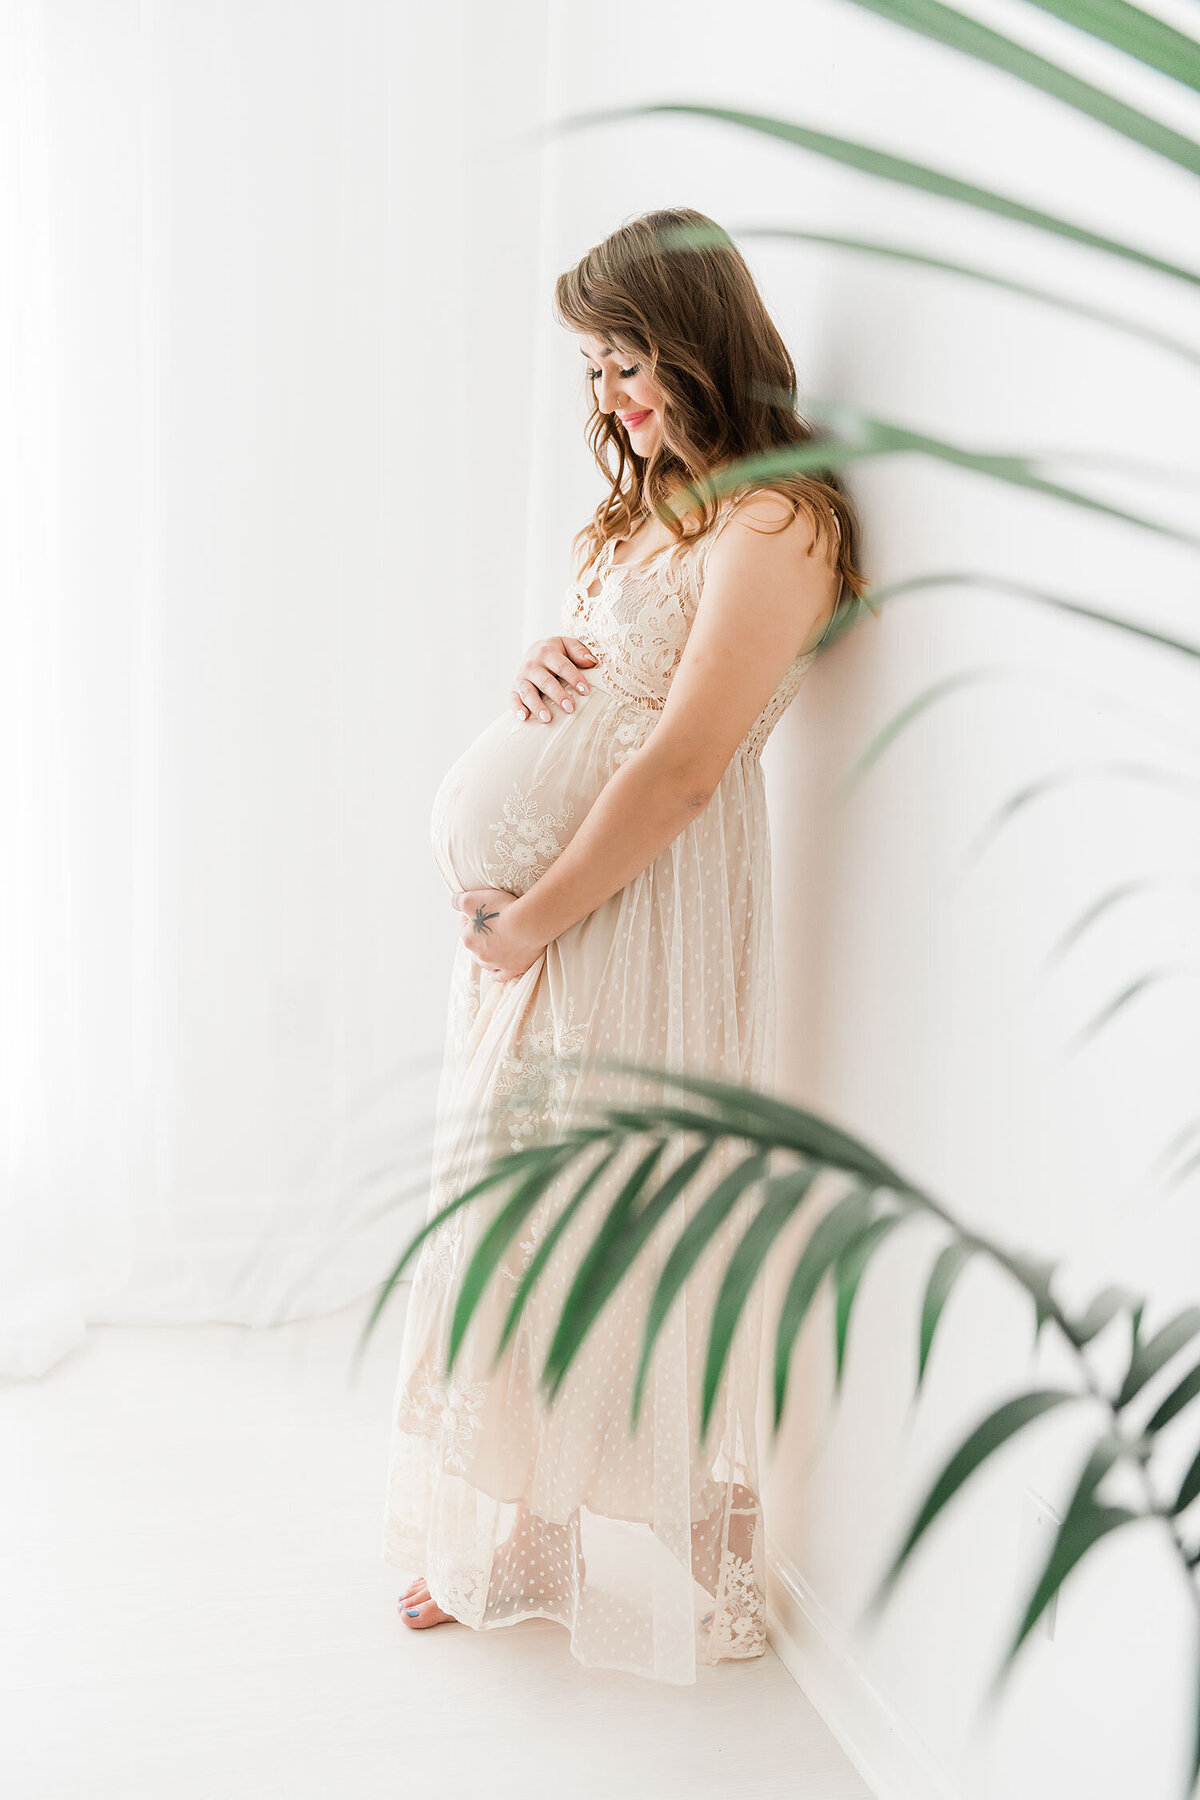 Pensacola-maternity-photographer-1